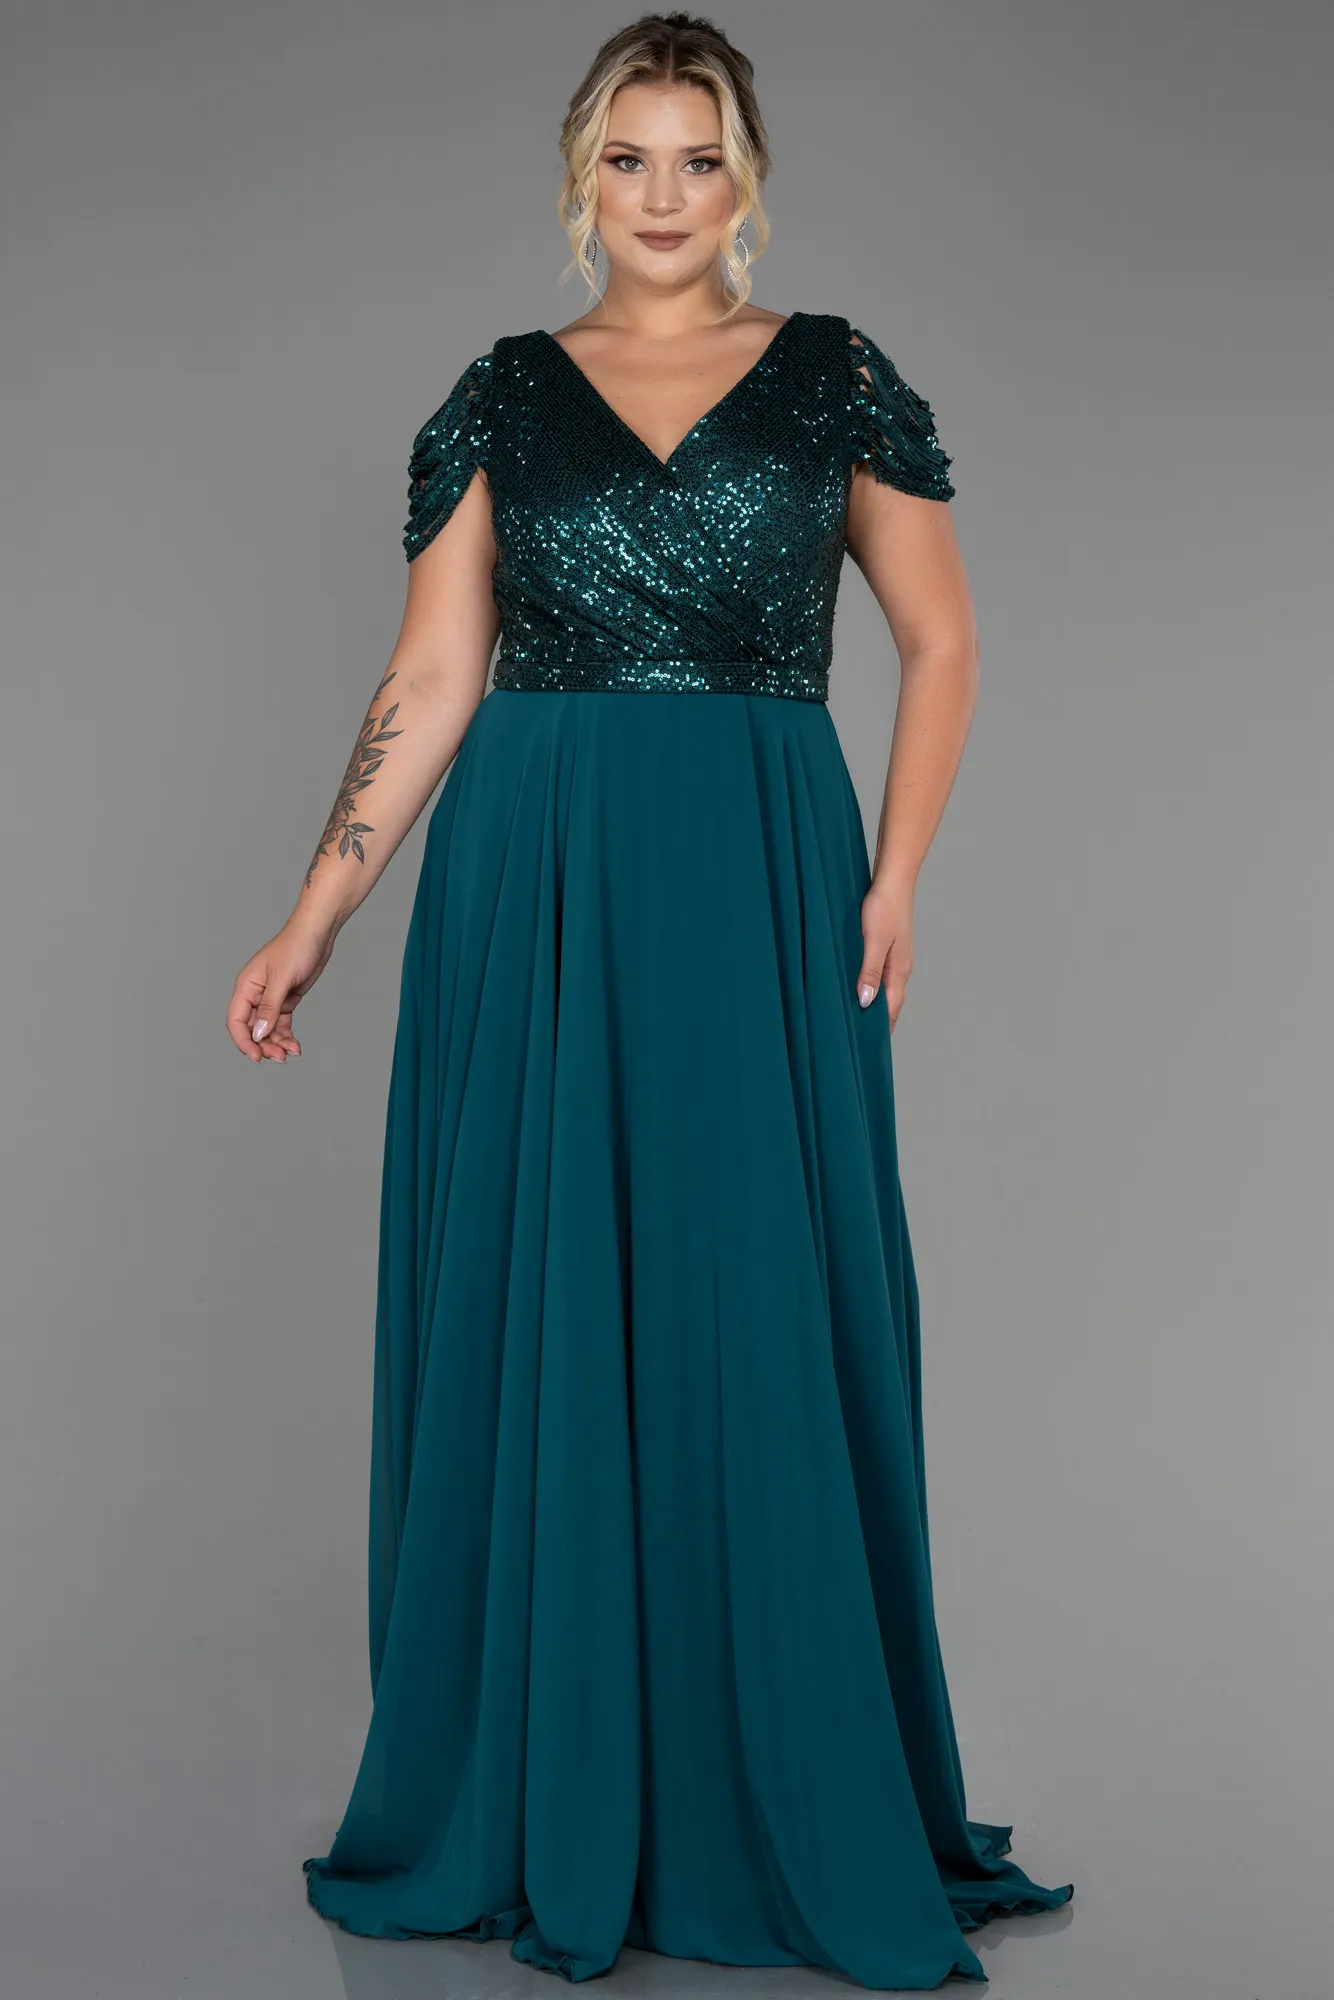 Emerald Green-Long Plus Size Evening Dress ABU828